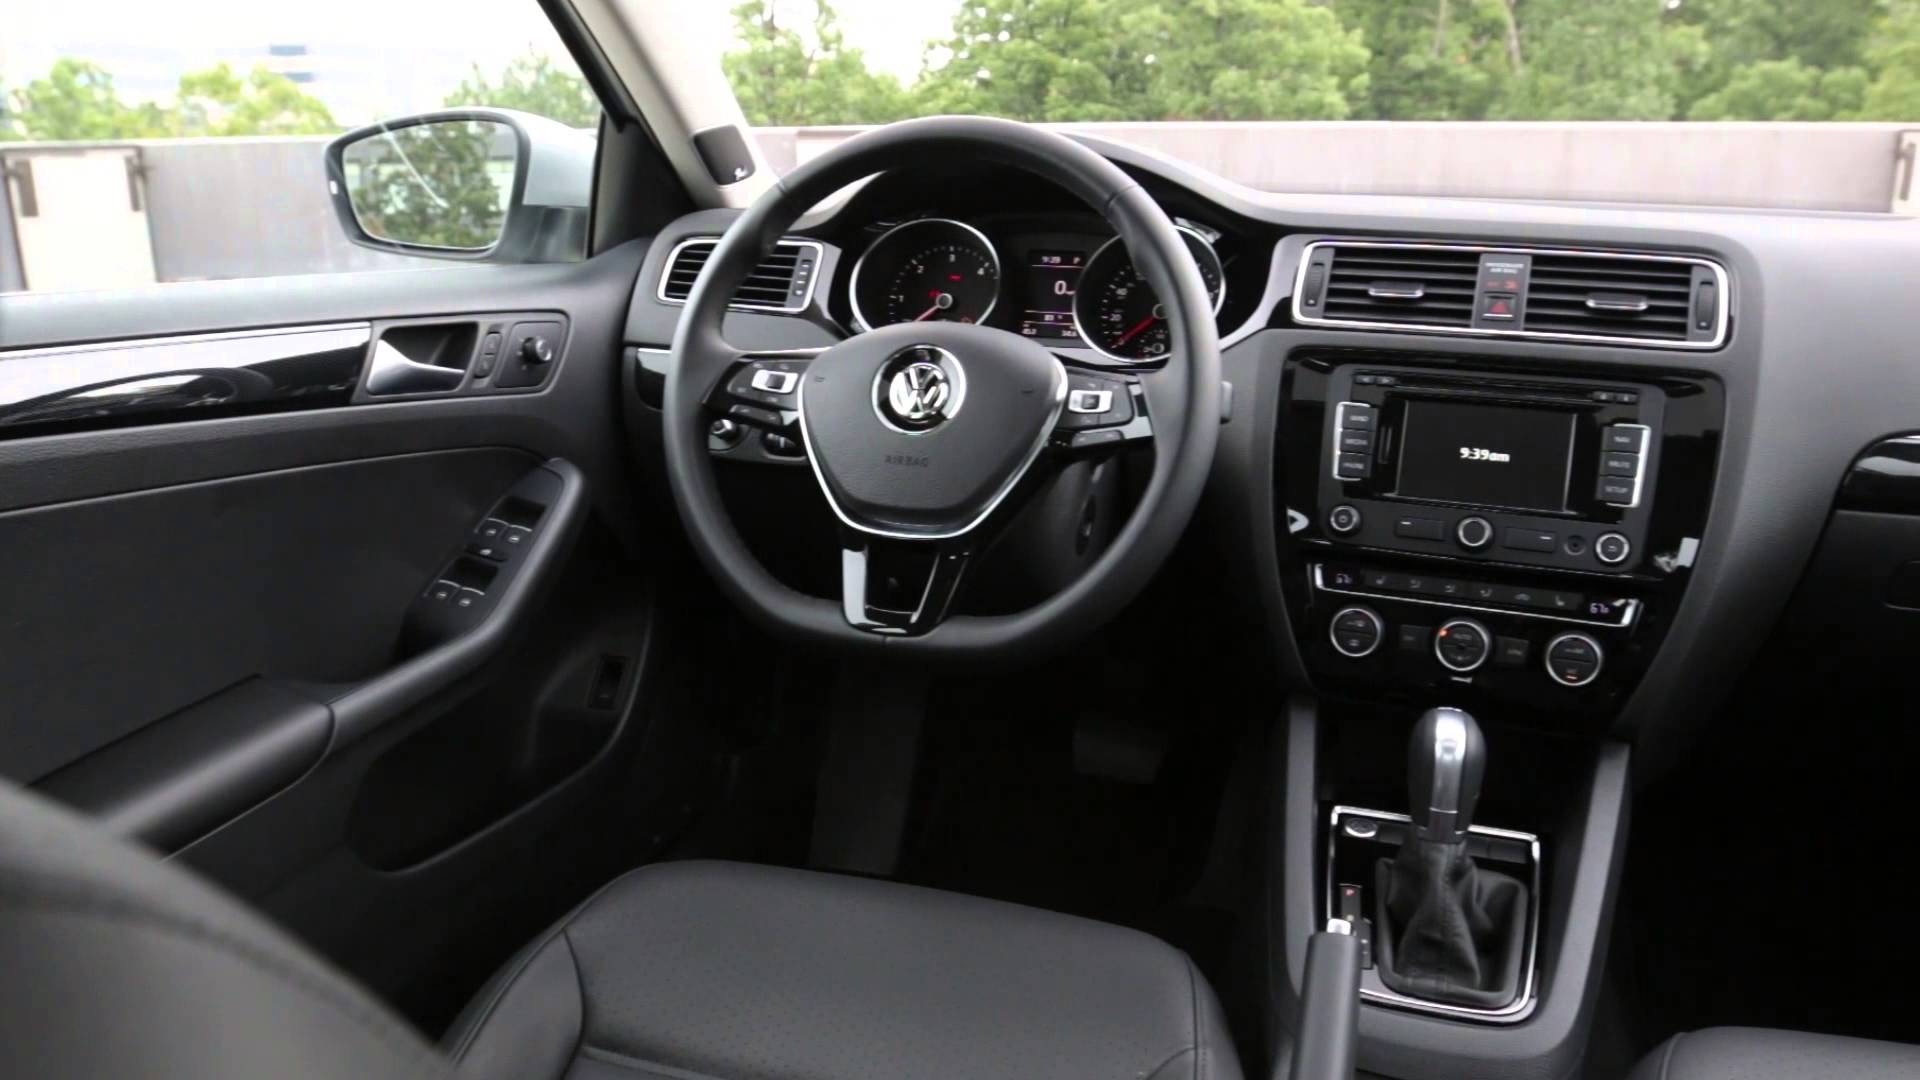 VW Jetta Interiors